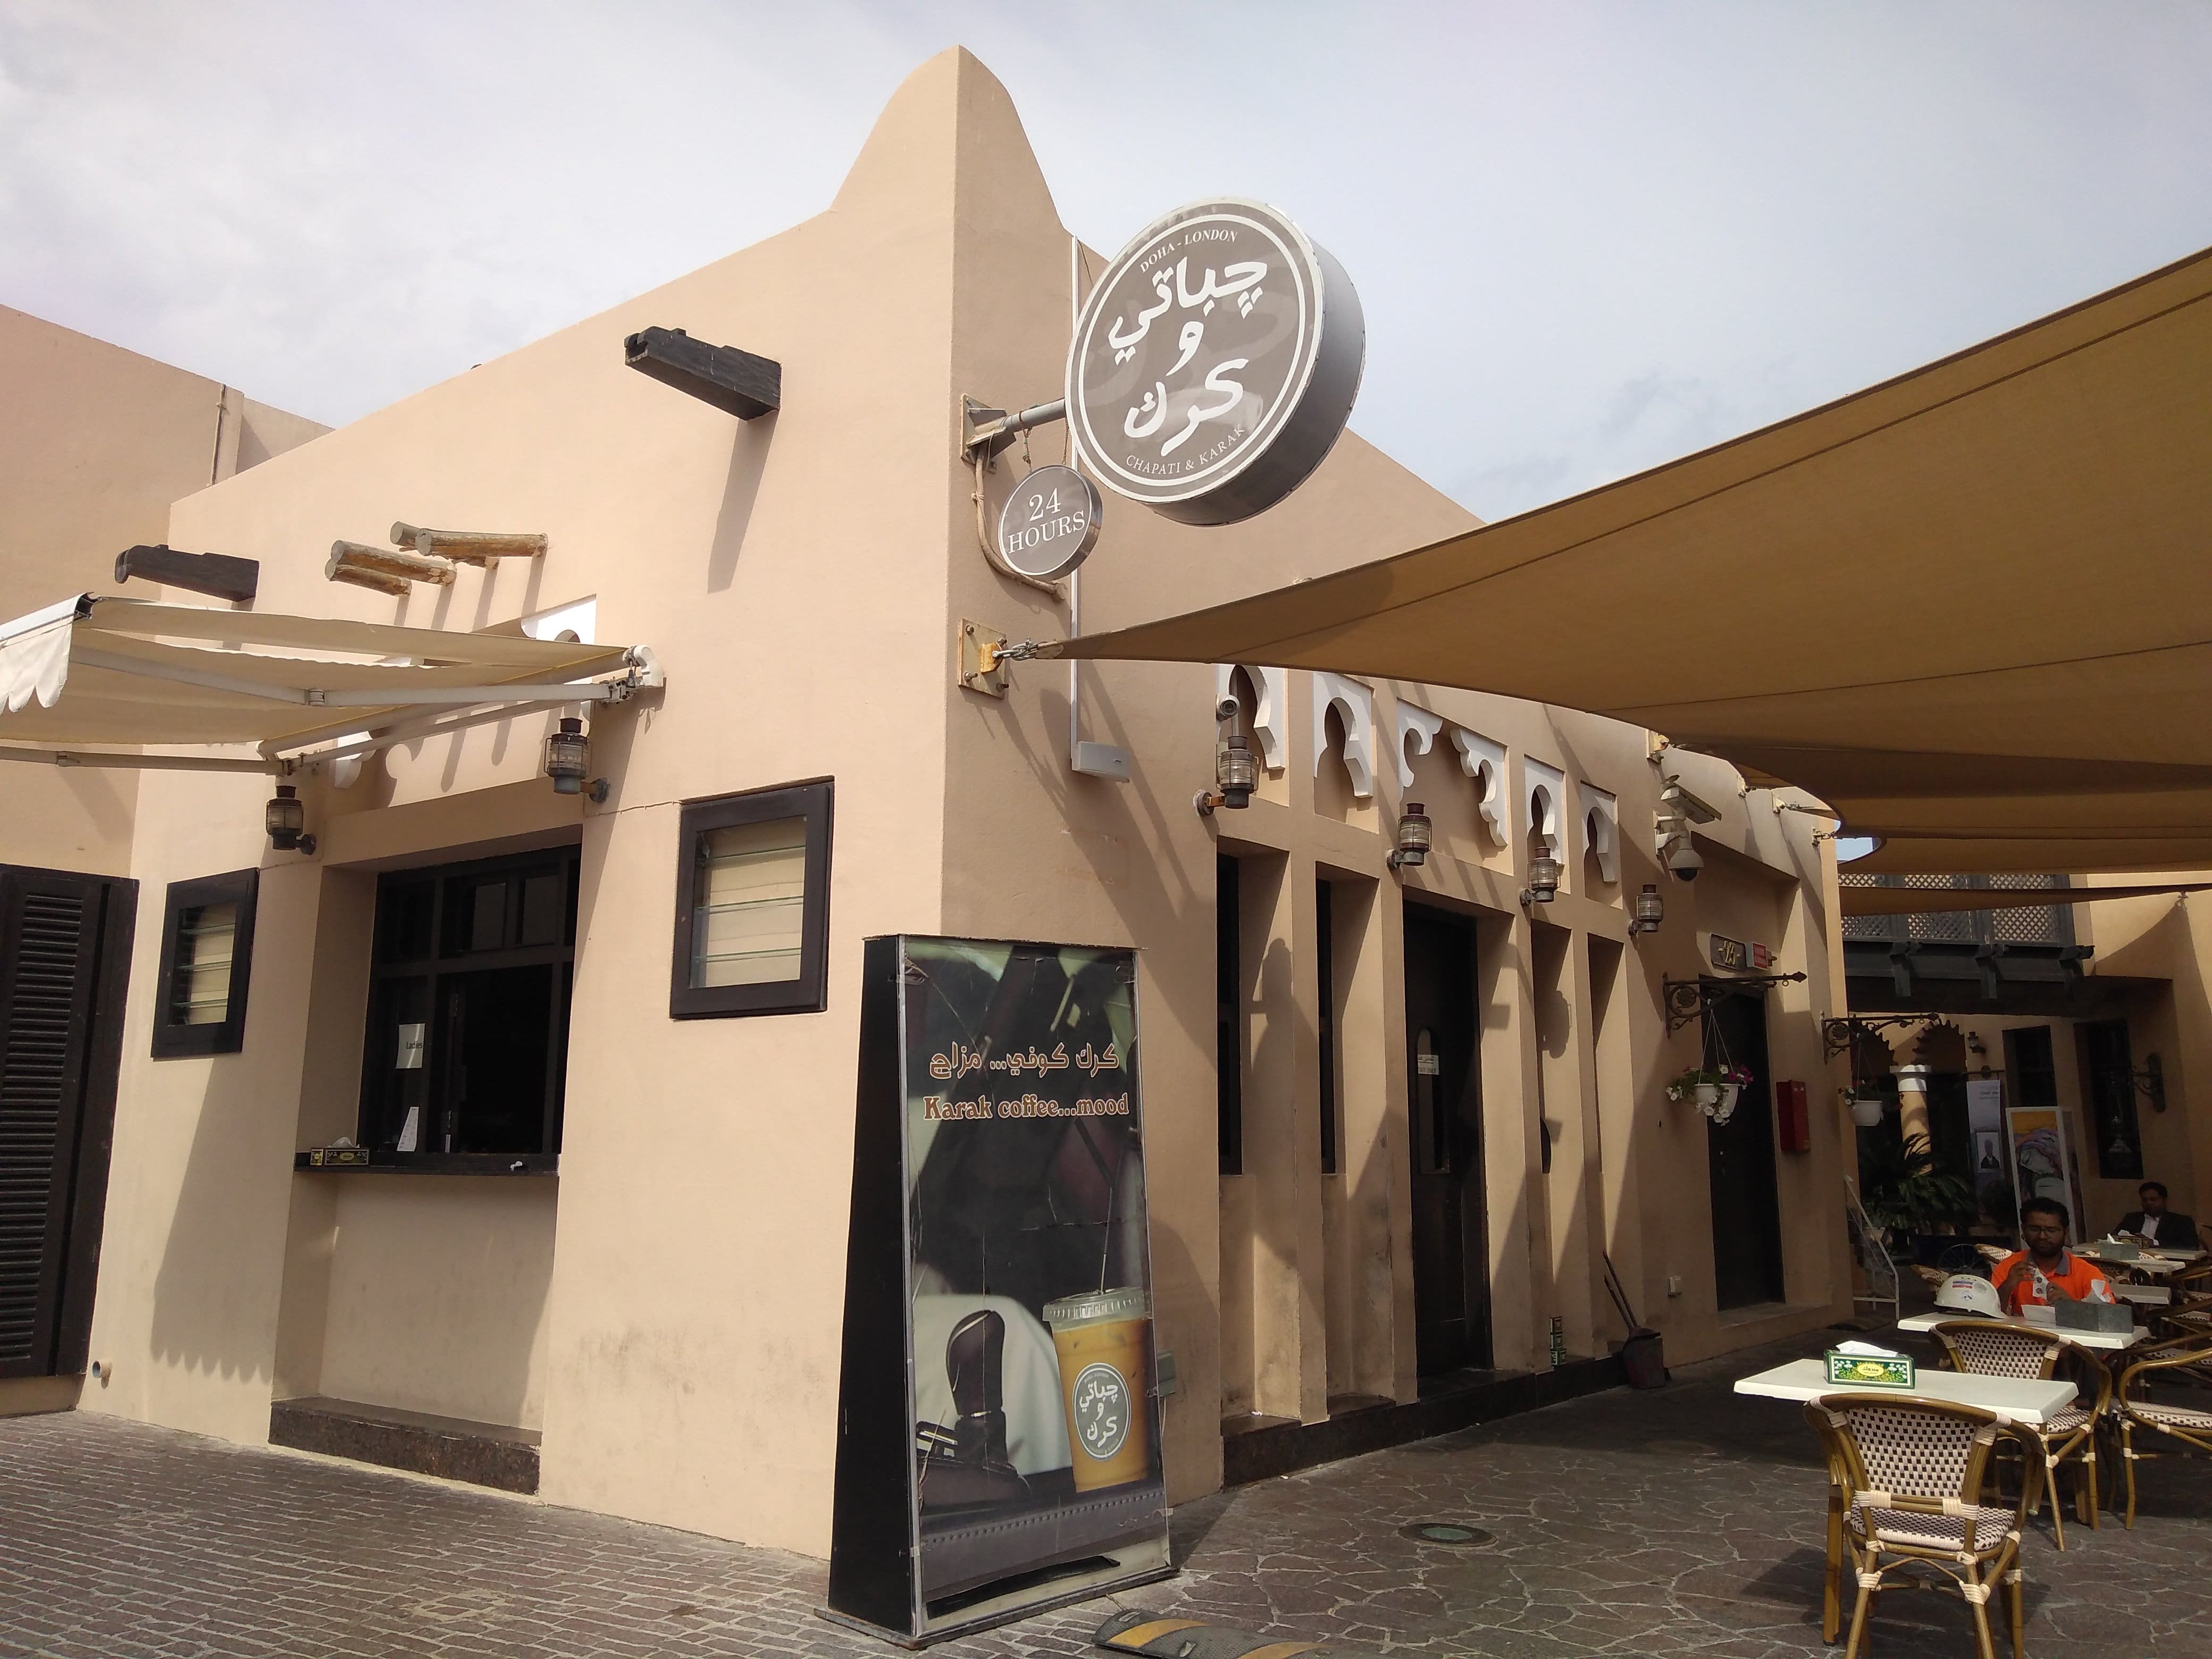 Chapati & Karak Photos, Pictures of Chapati & Karak, Katara, Doha